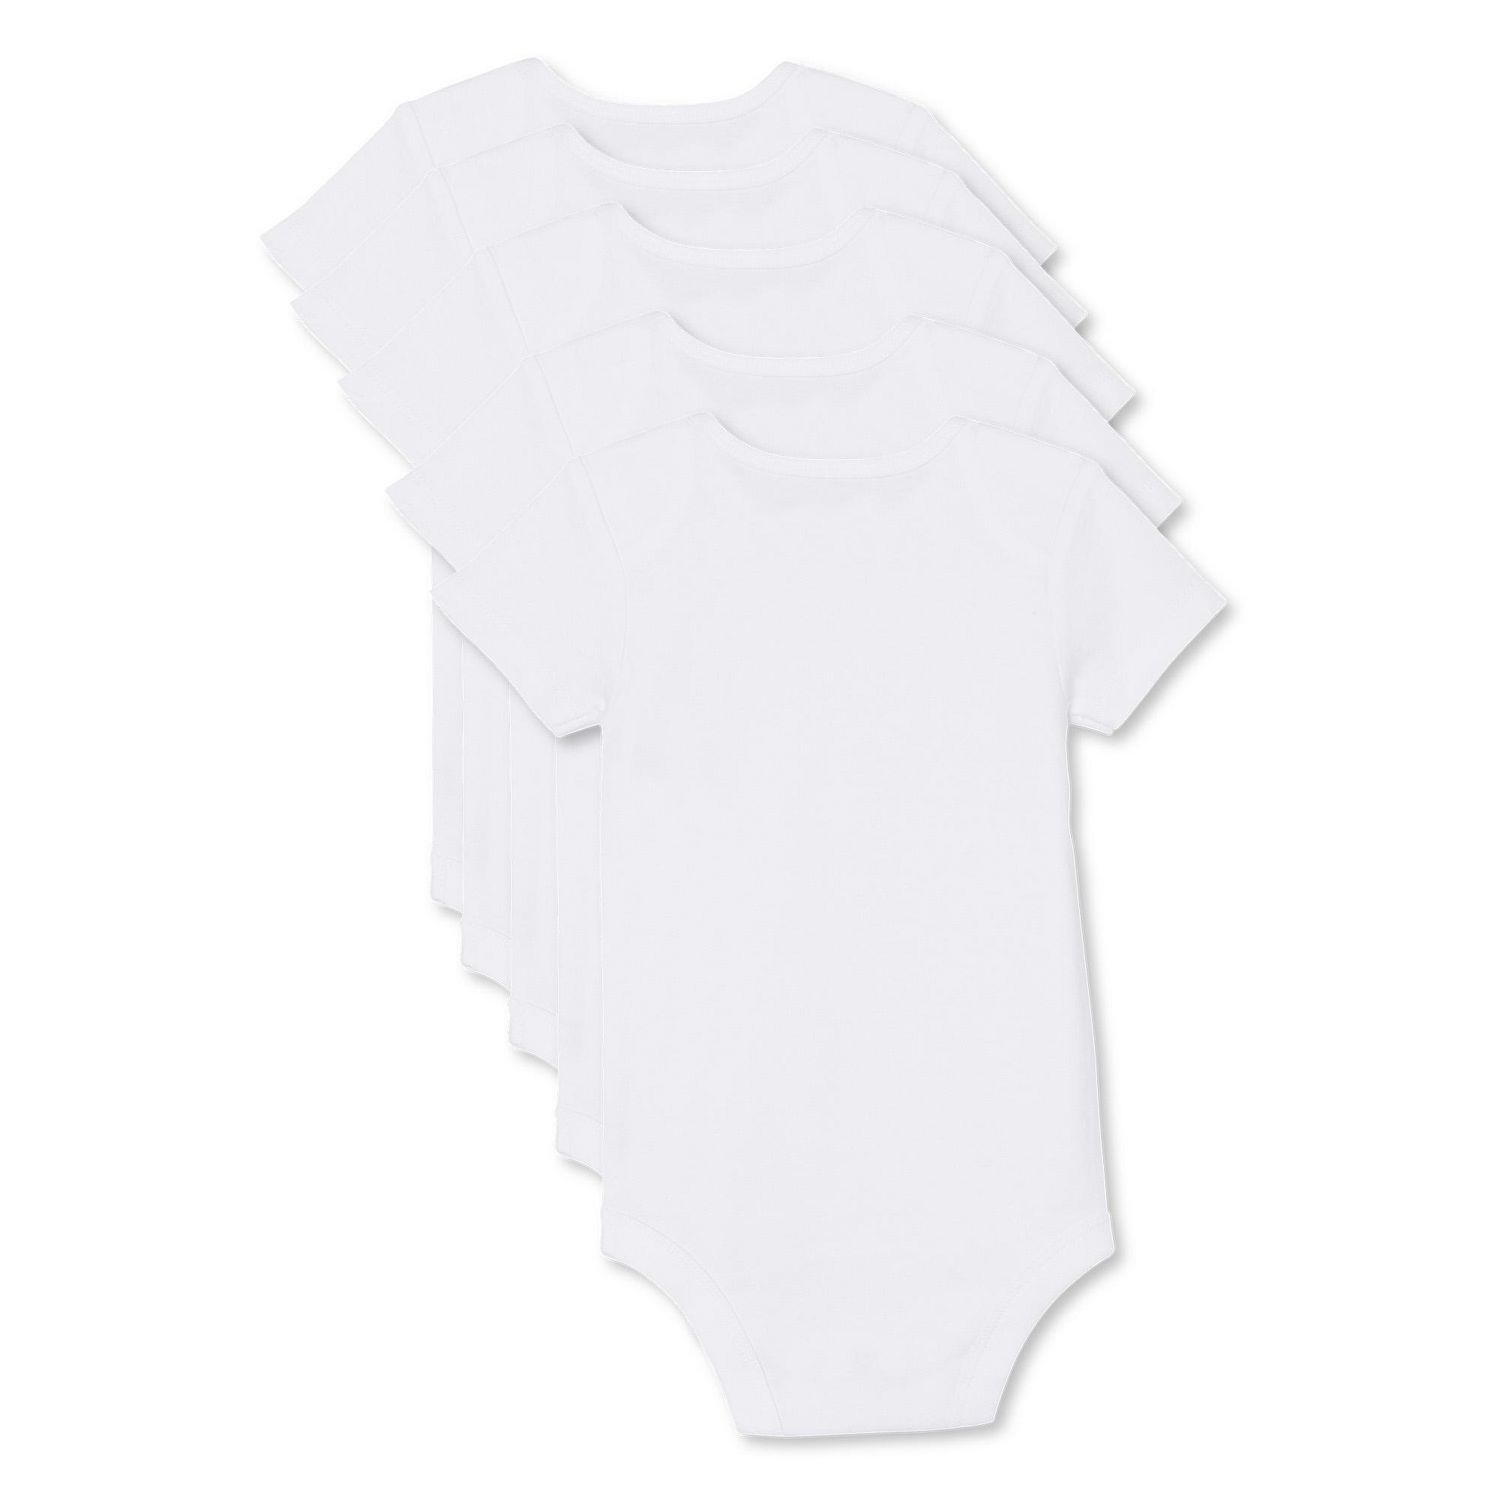 George Infants' Unisex Long Sleeve Bodysuits 4-Pack, Sizes 0-24